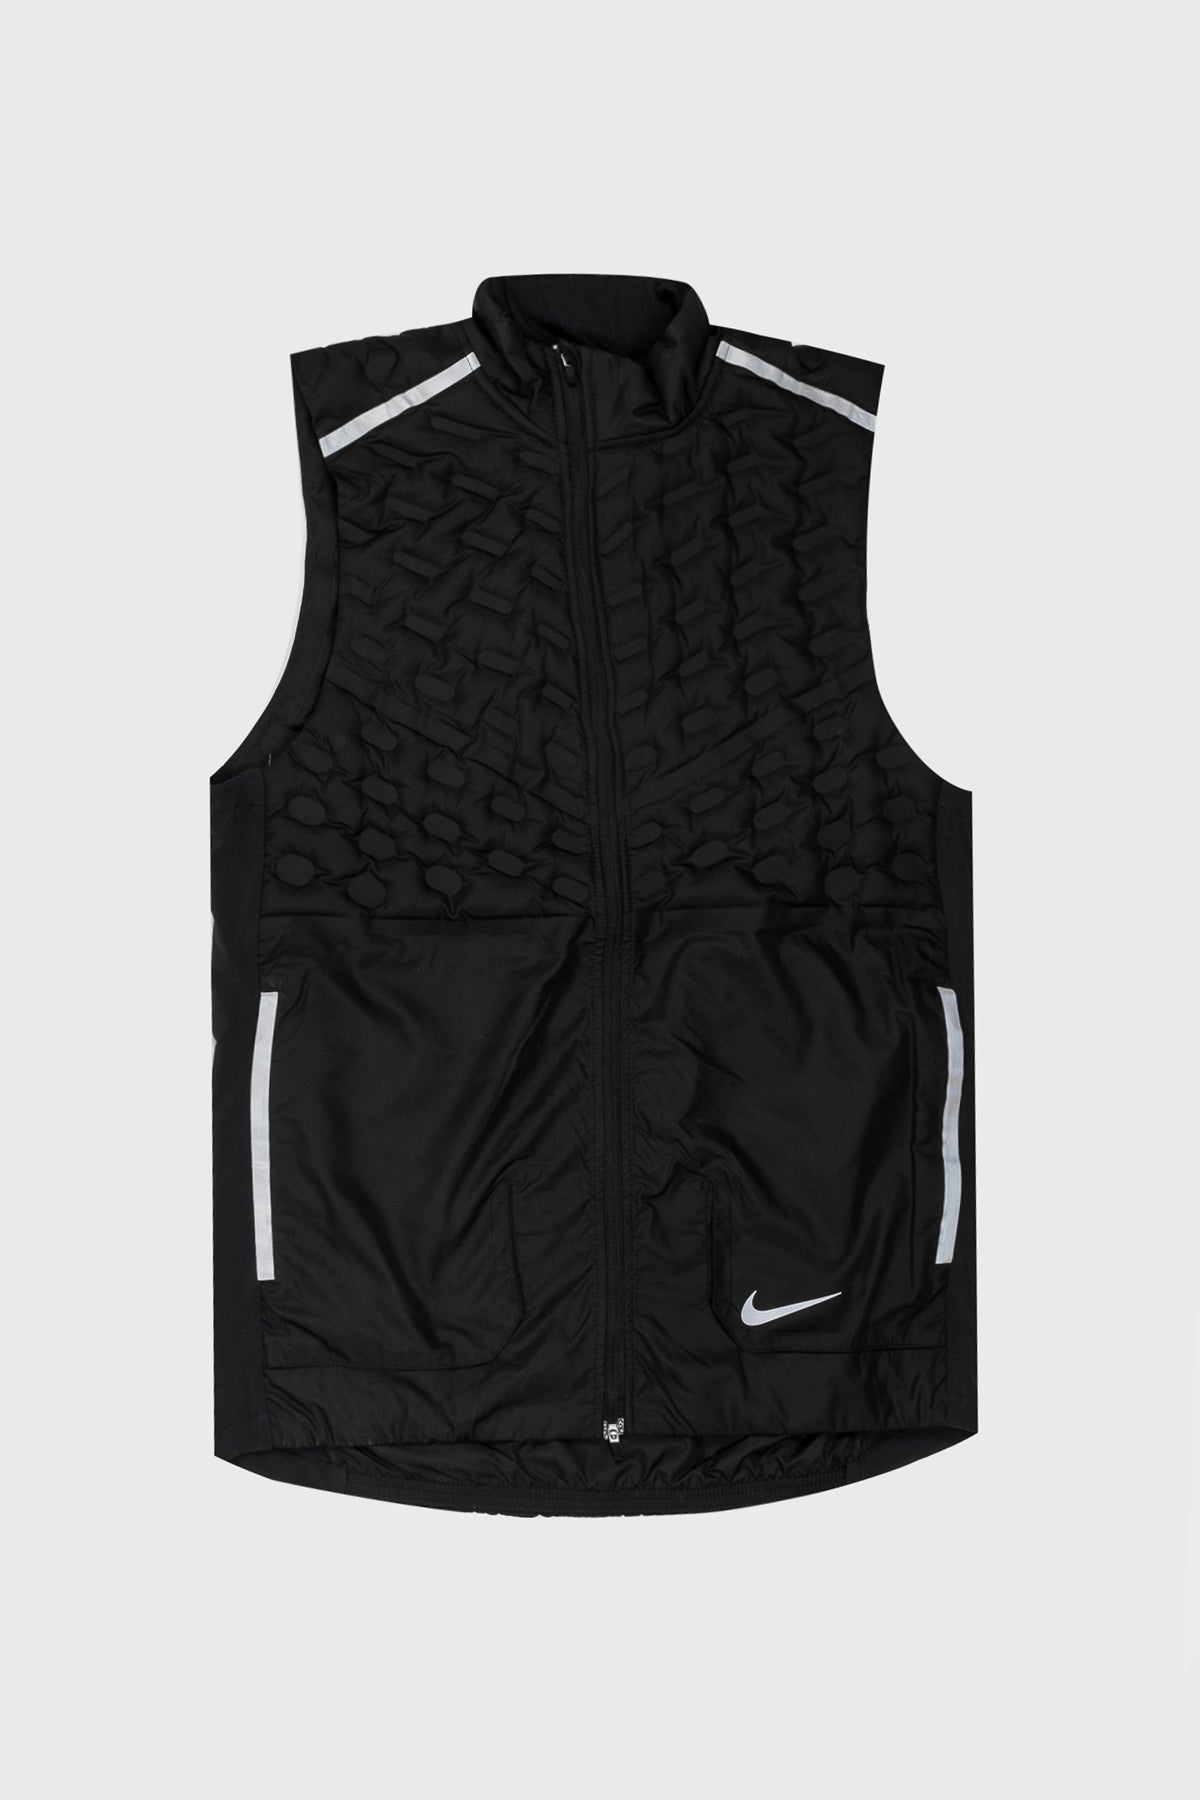 Nike - Men's Running Vest Nike AeroLoft